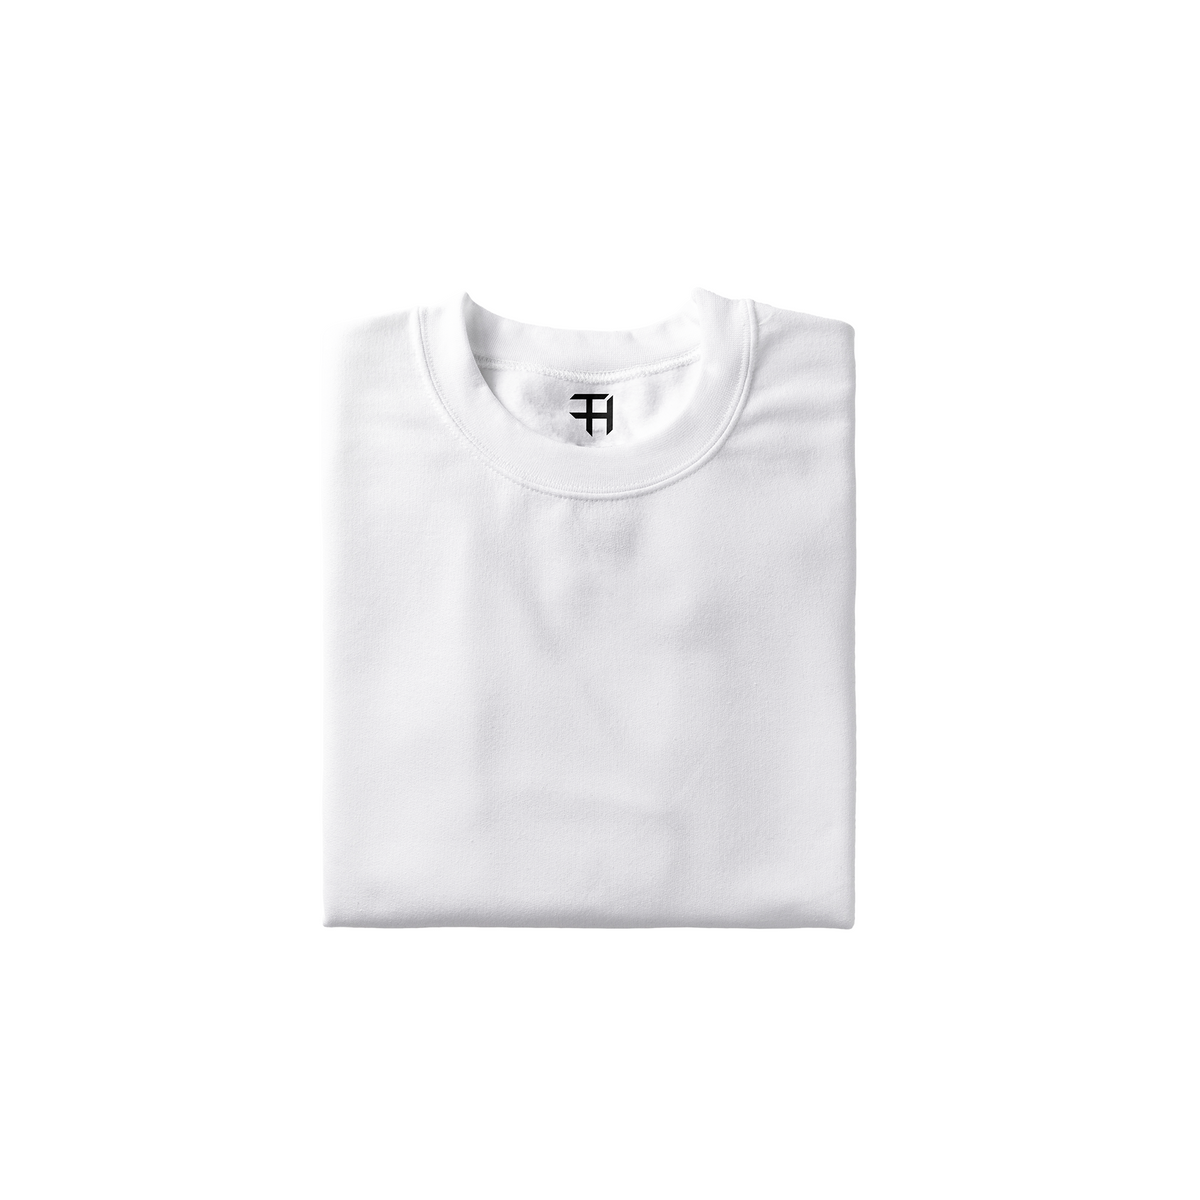 Teeshood White Unisex T-shirt